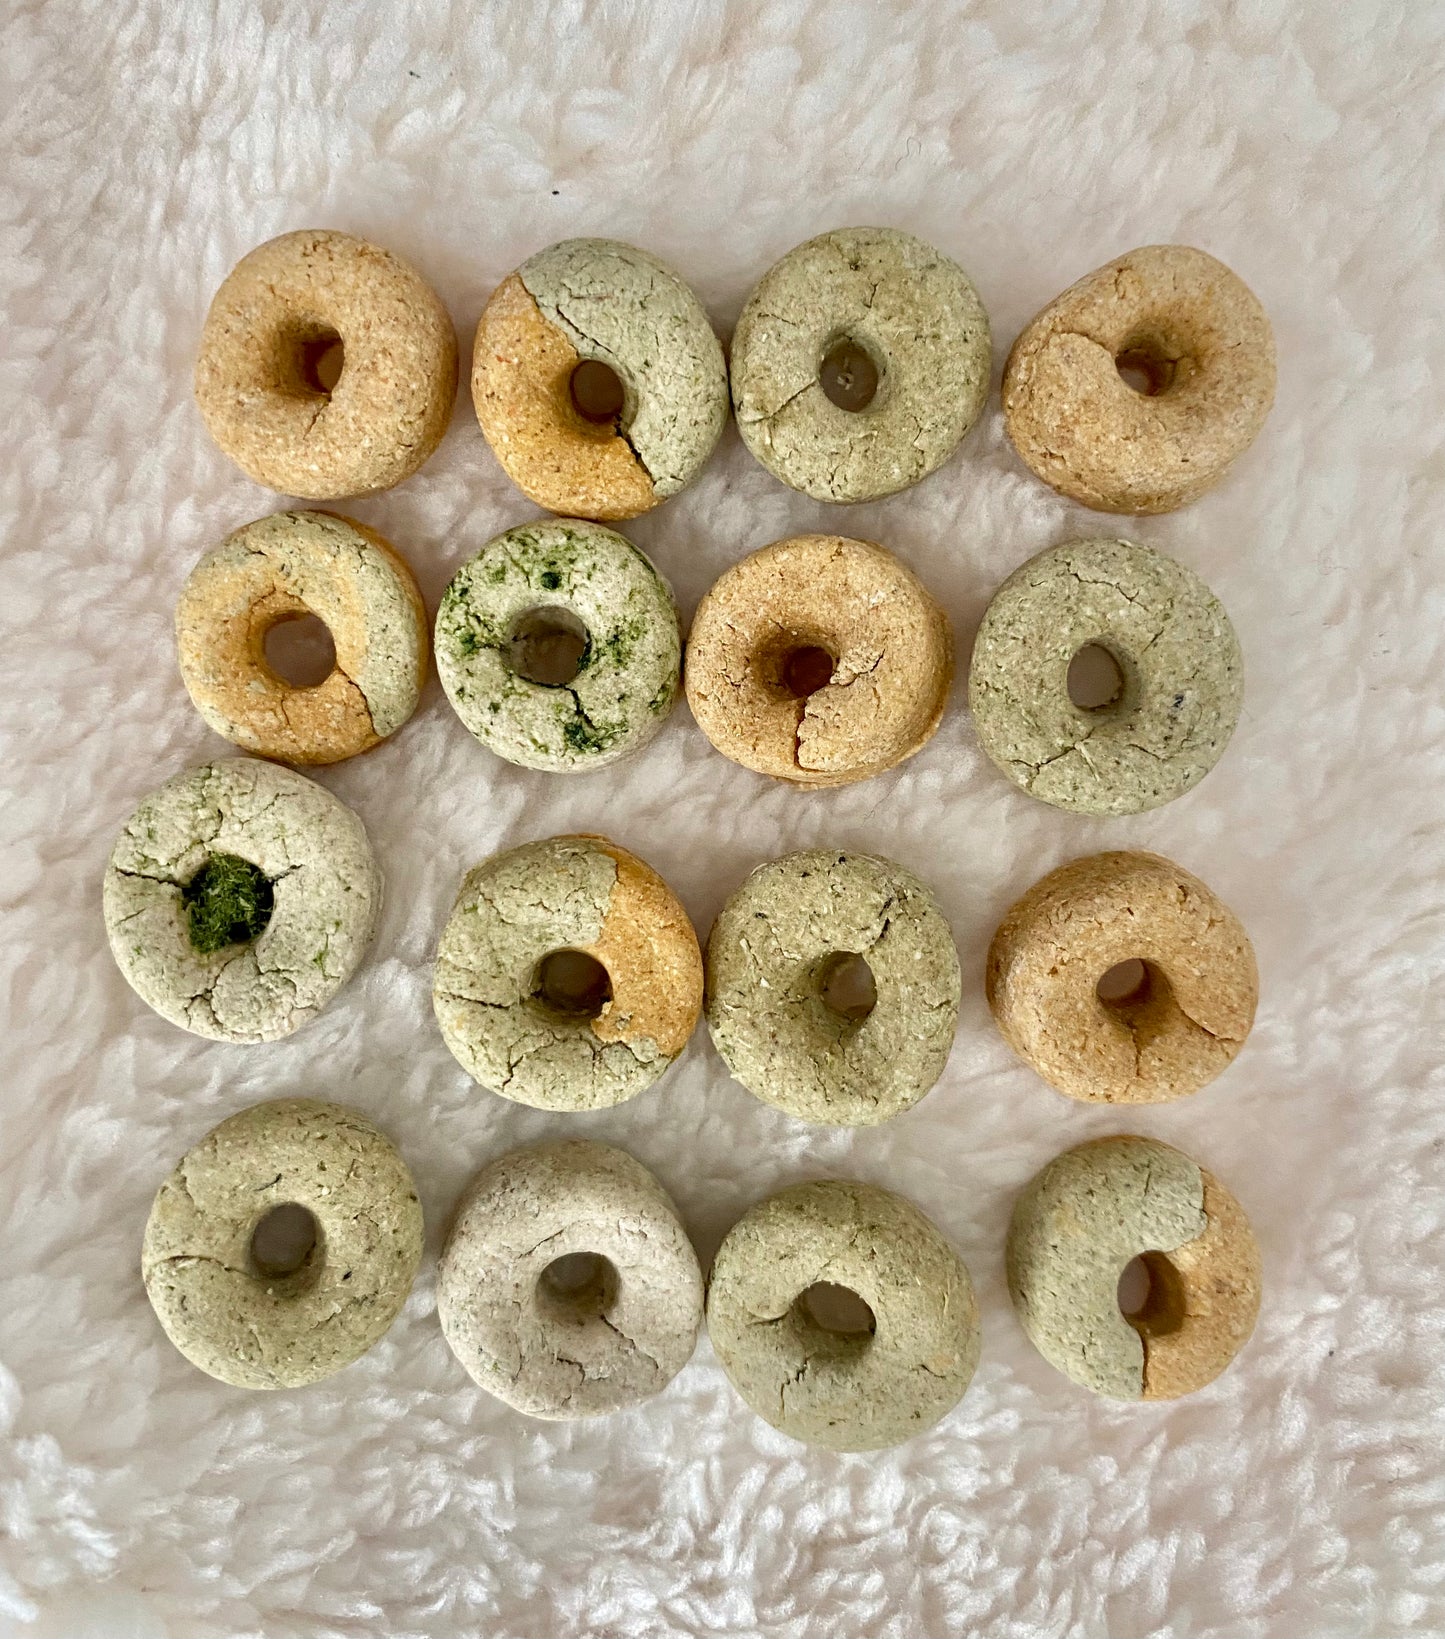 Organic/Natural mini donuts (treats)!